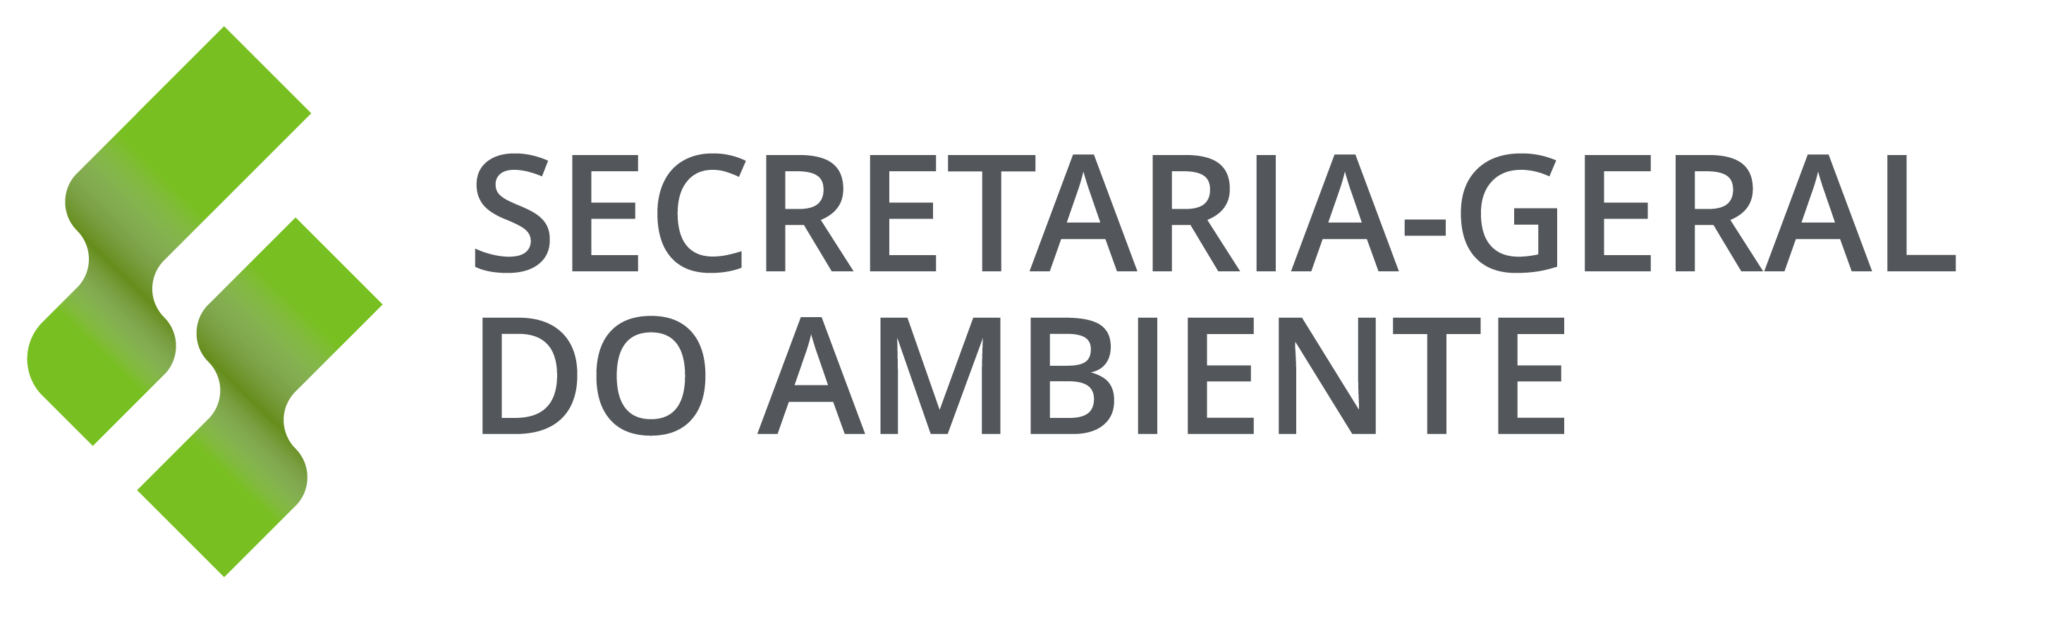 Logotipo da Secretaria-Geral do Ambiente